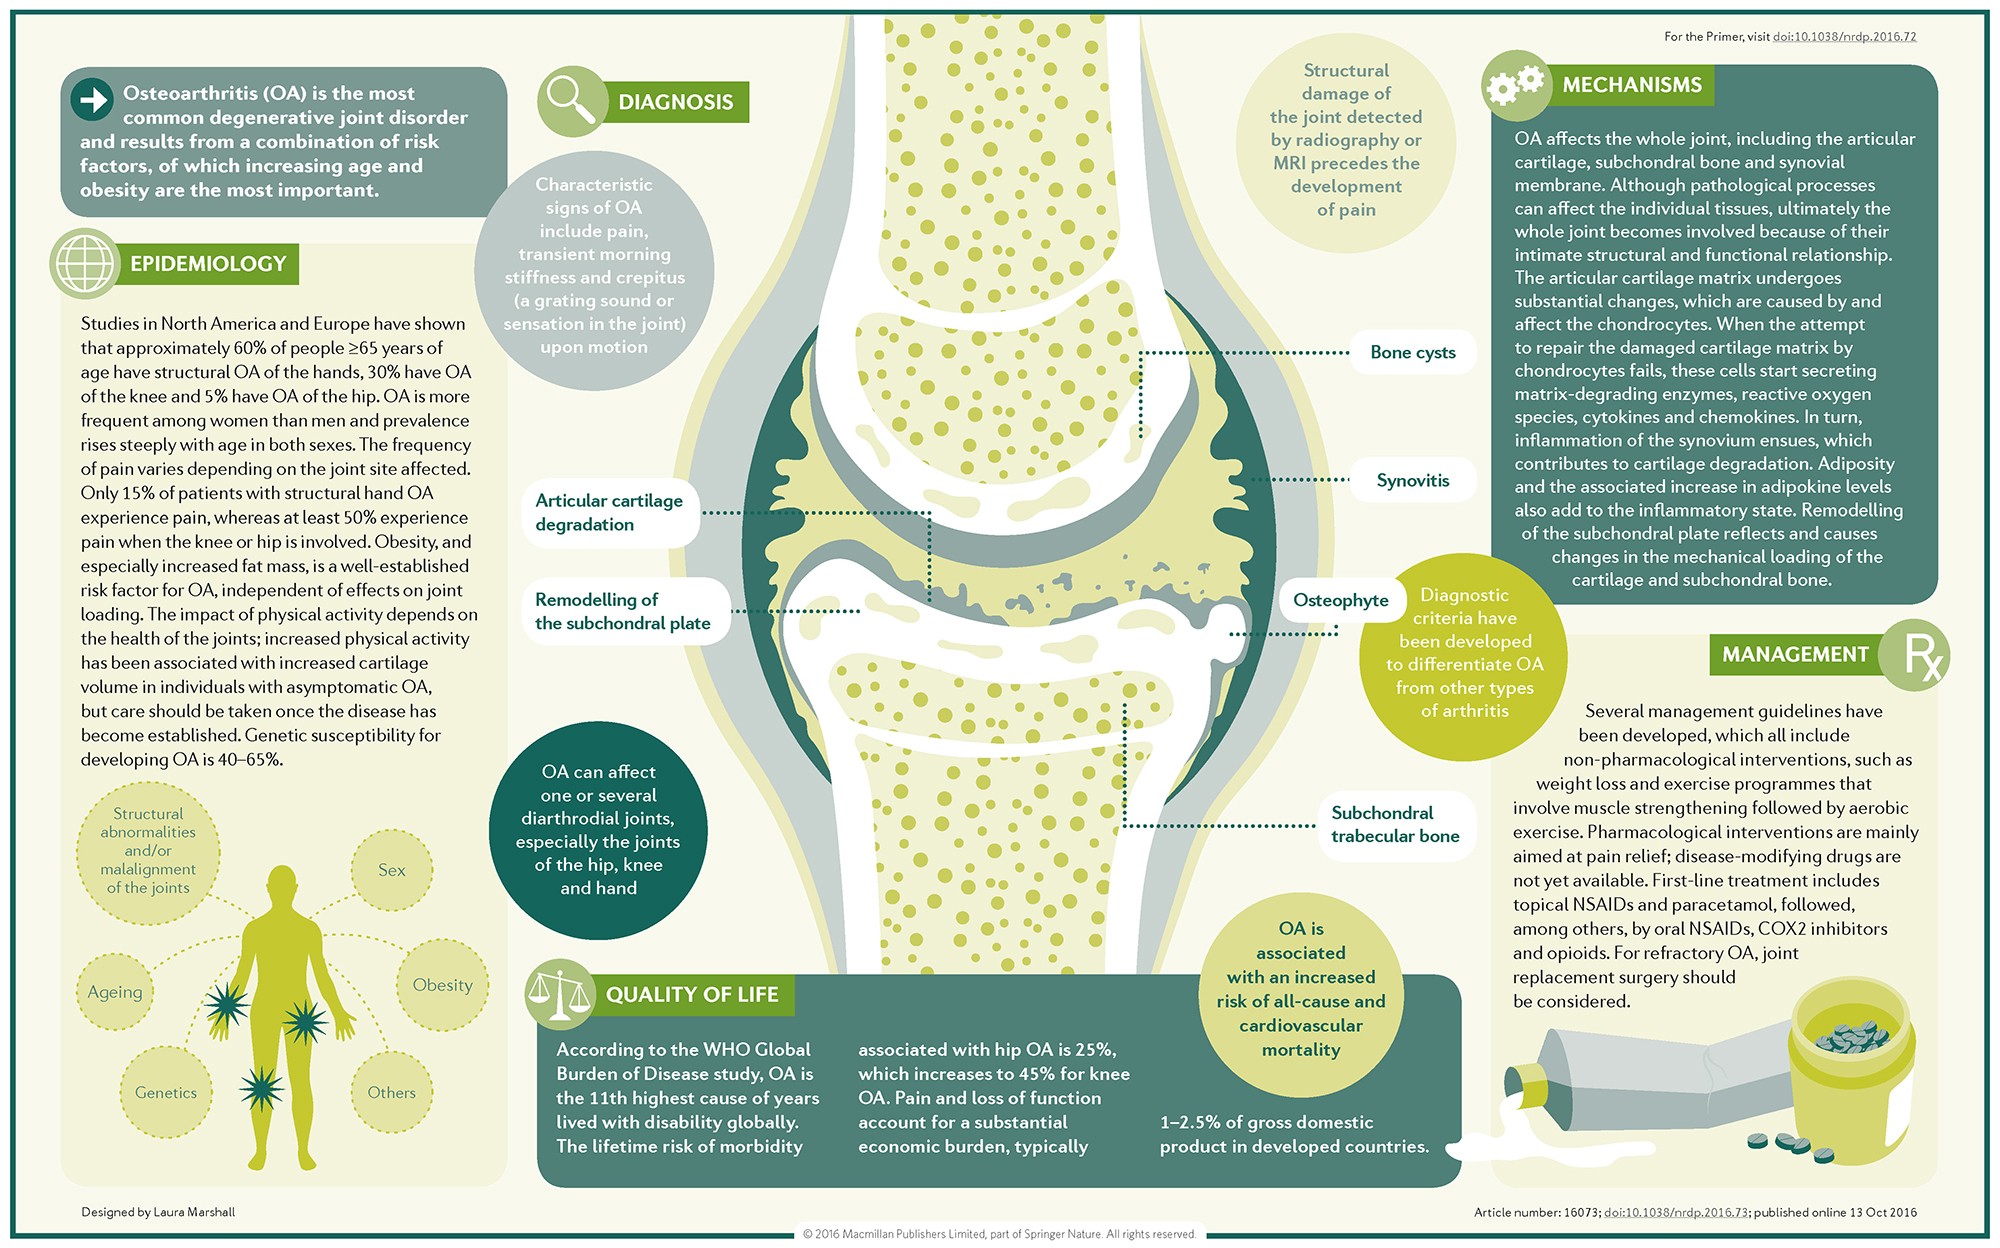 Nature reviews. Osteoarthritis treatment Guidelines. Остеоартрит эпидемиология.